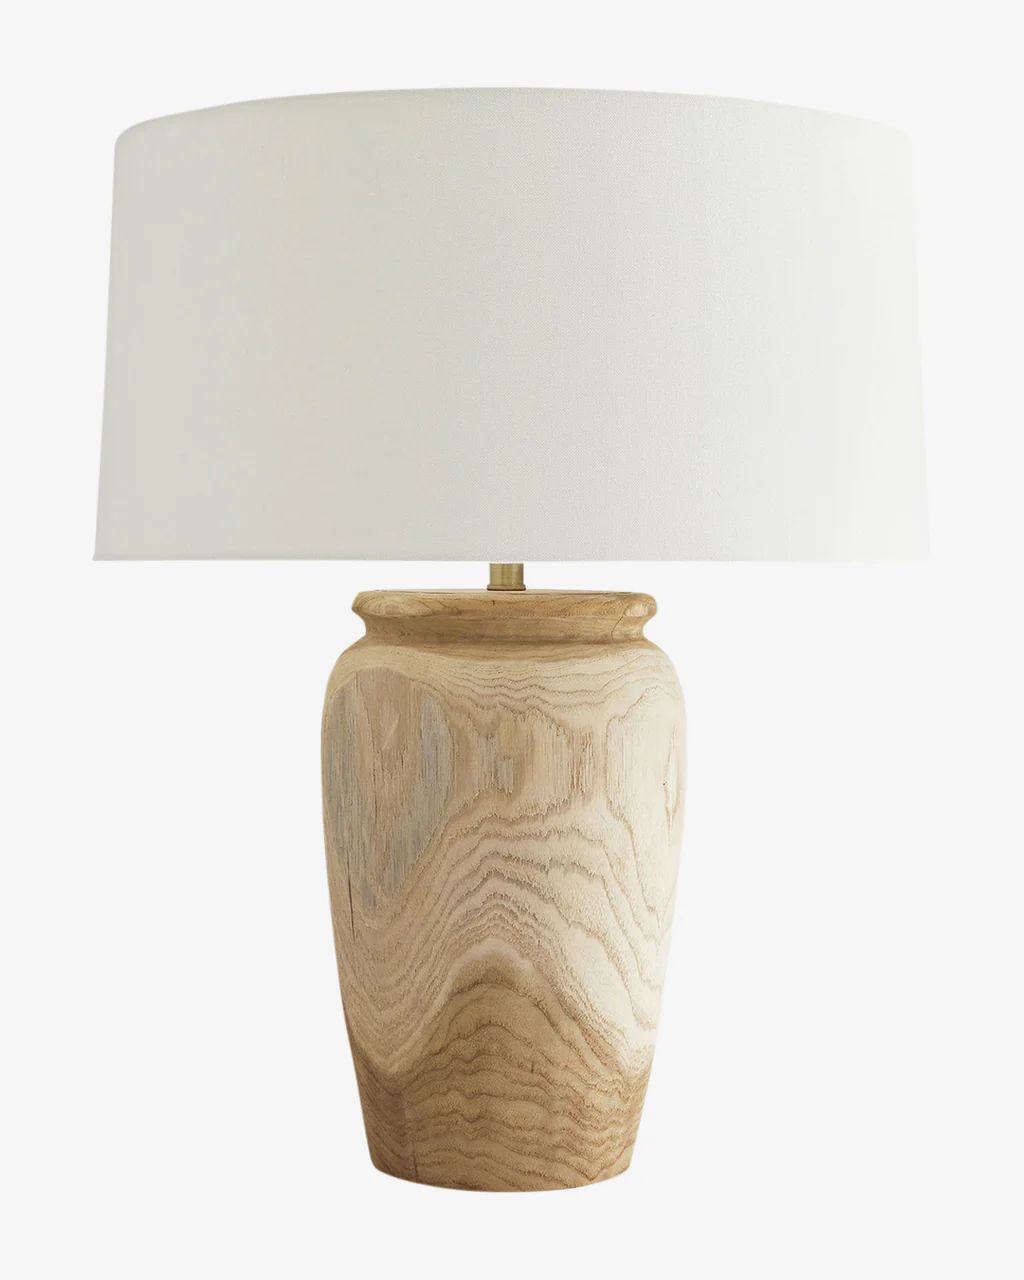 Gunner Table Lamp | McGee & Co.